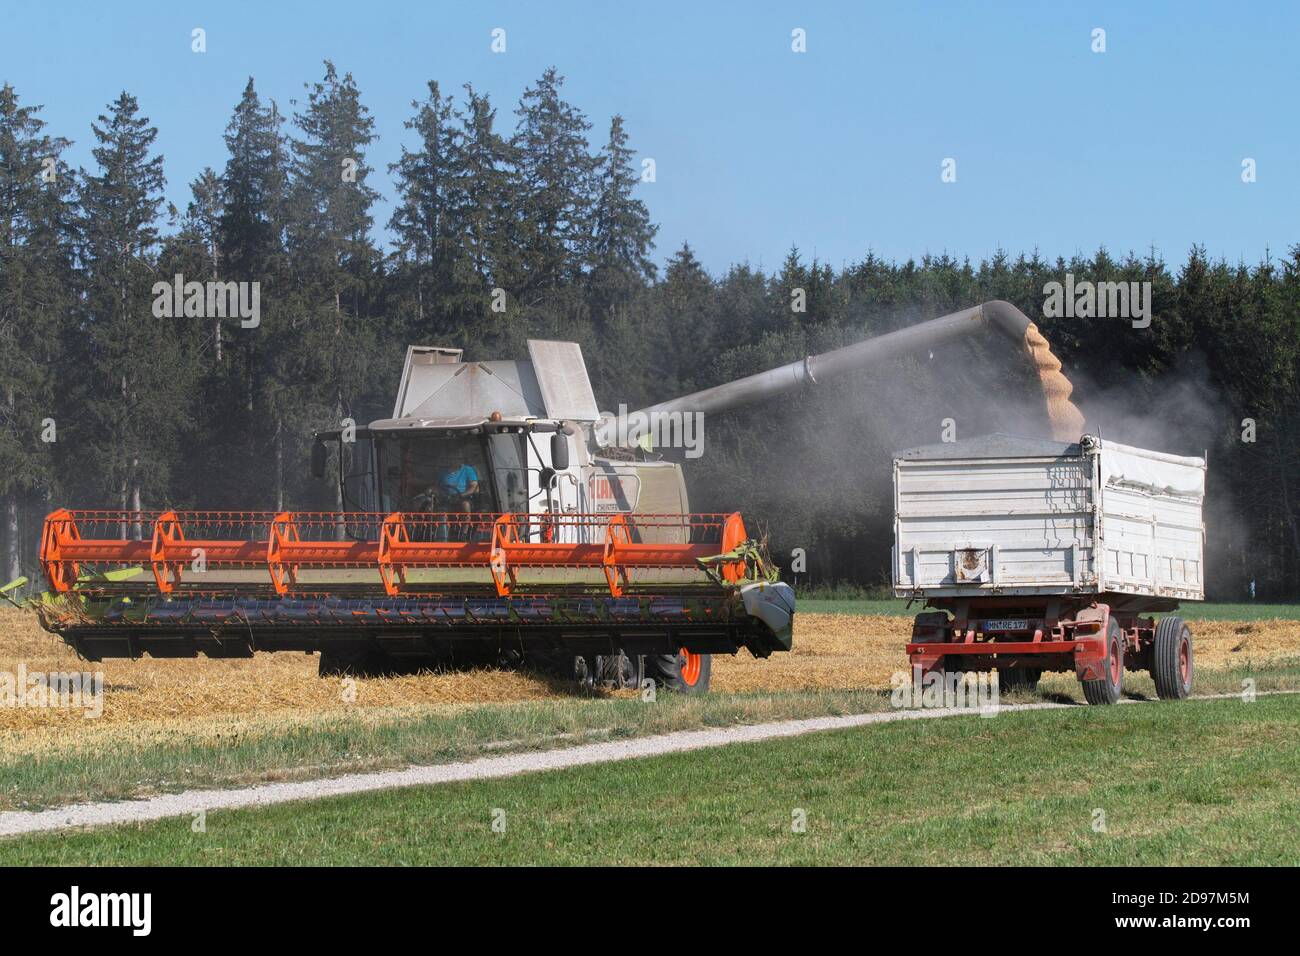 combine harvester delivering grain. Stock Photo